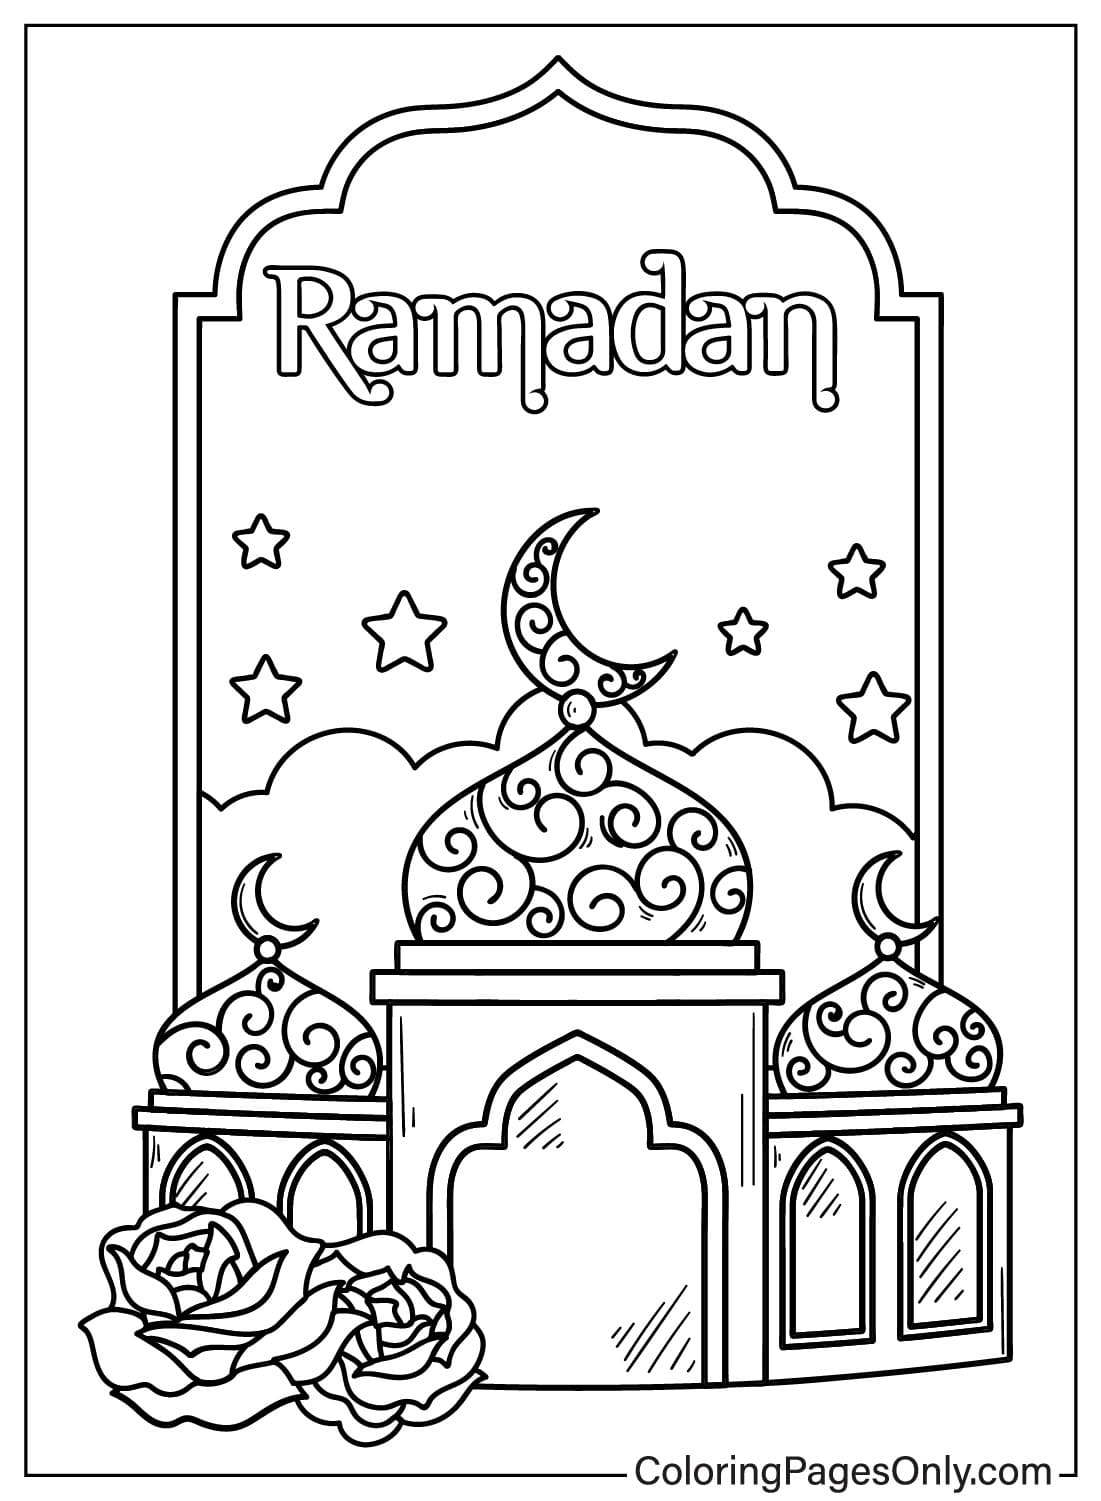 Página para colorear del evento de Ramadán de Ramadán